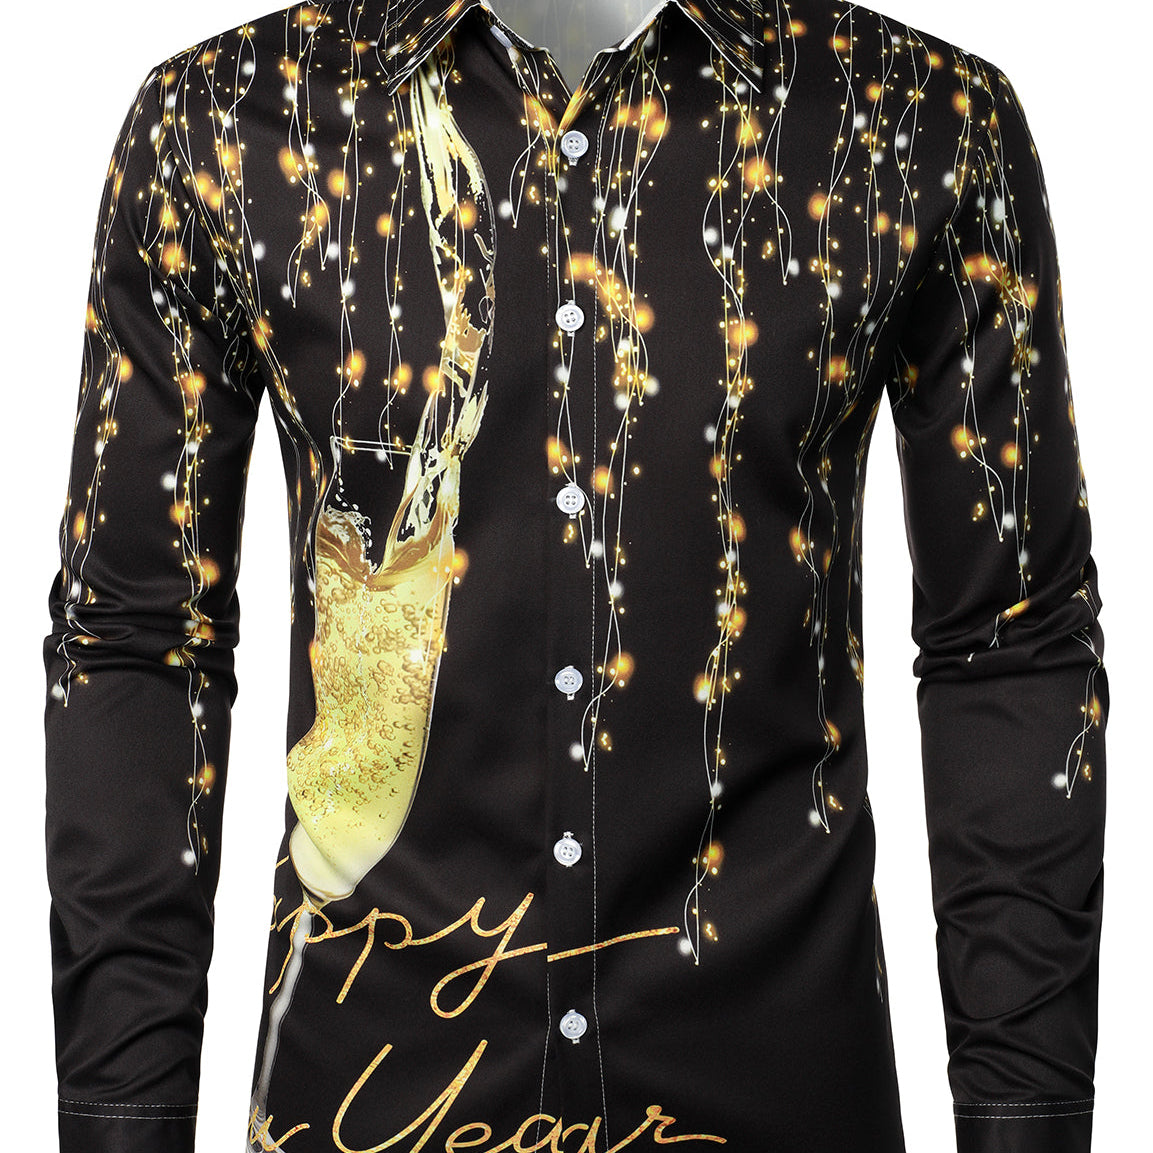 Camisa de manga larga negra con botón de celebración de champán y aplausos divertidos para fiesta de Año Nuevo para hombre